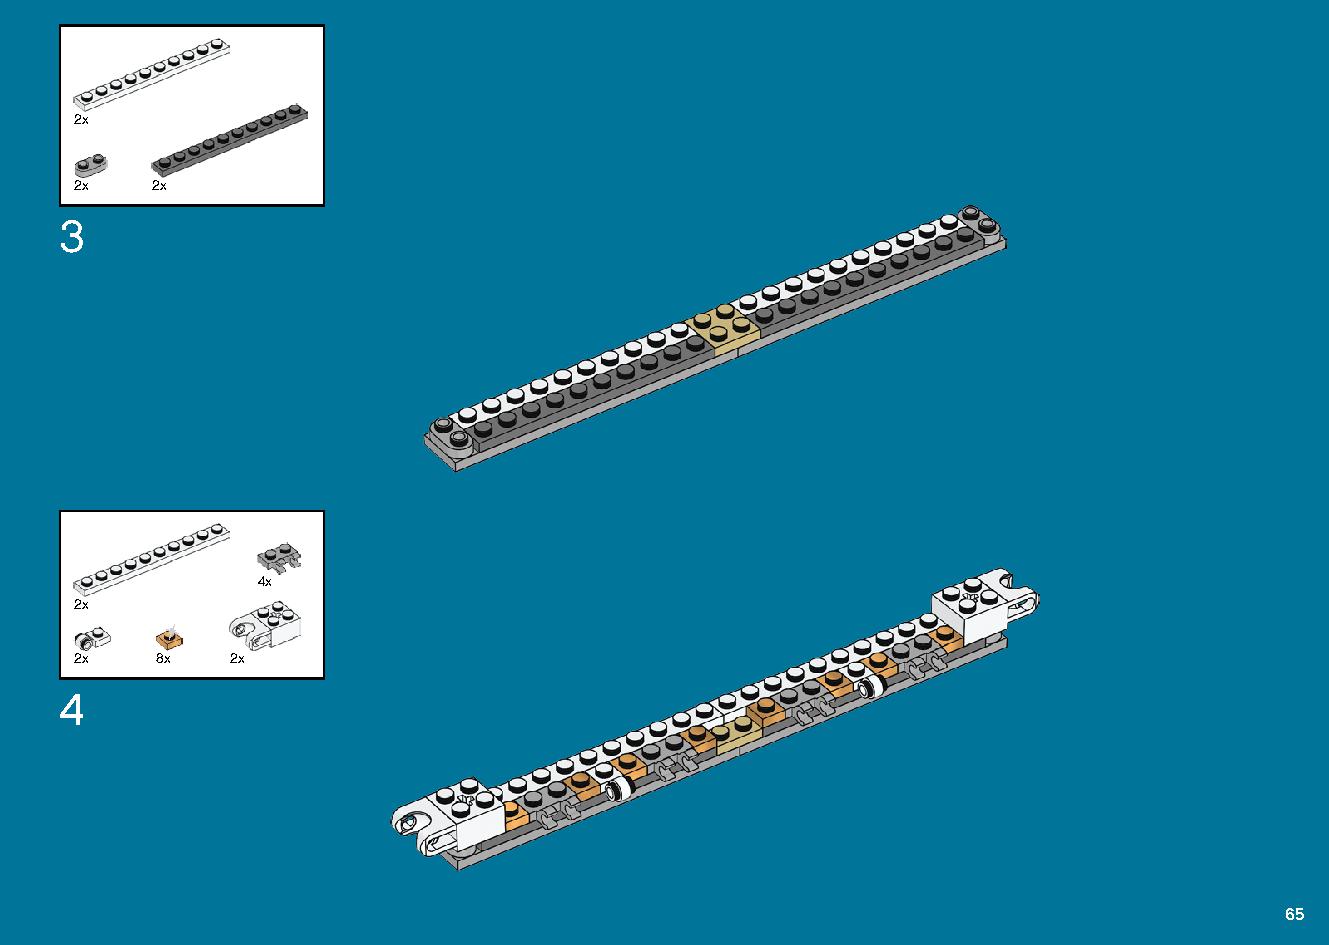 International Space Station 21321 レゴの商品情報 レゴの説明書・組立方法 65 page